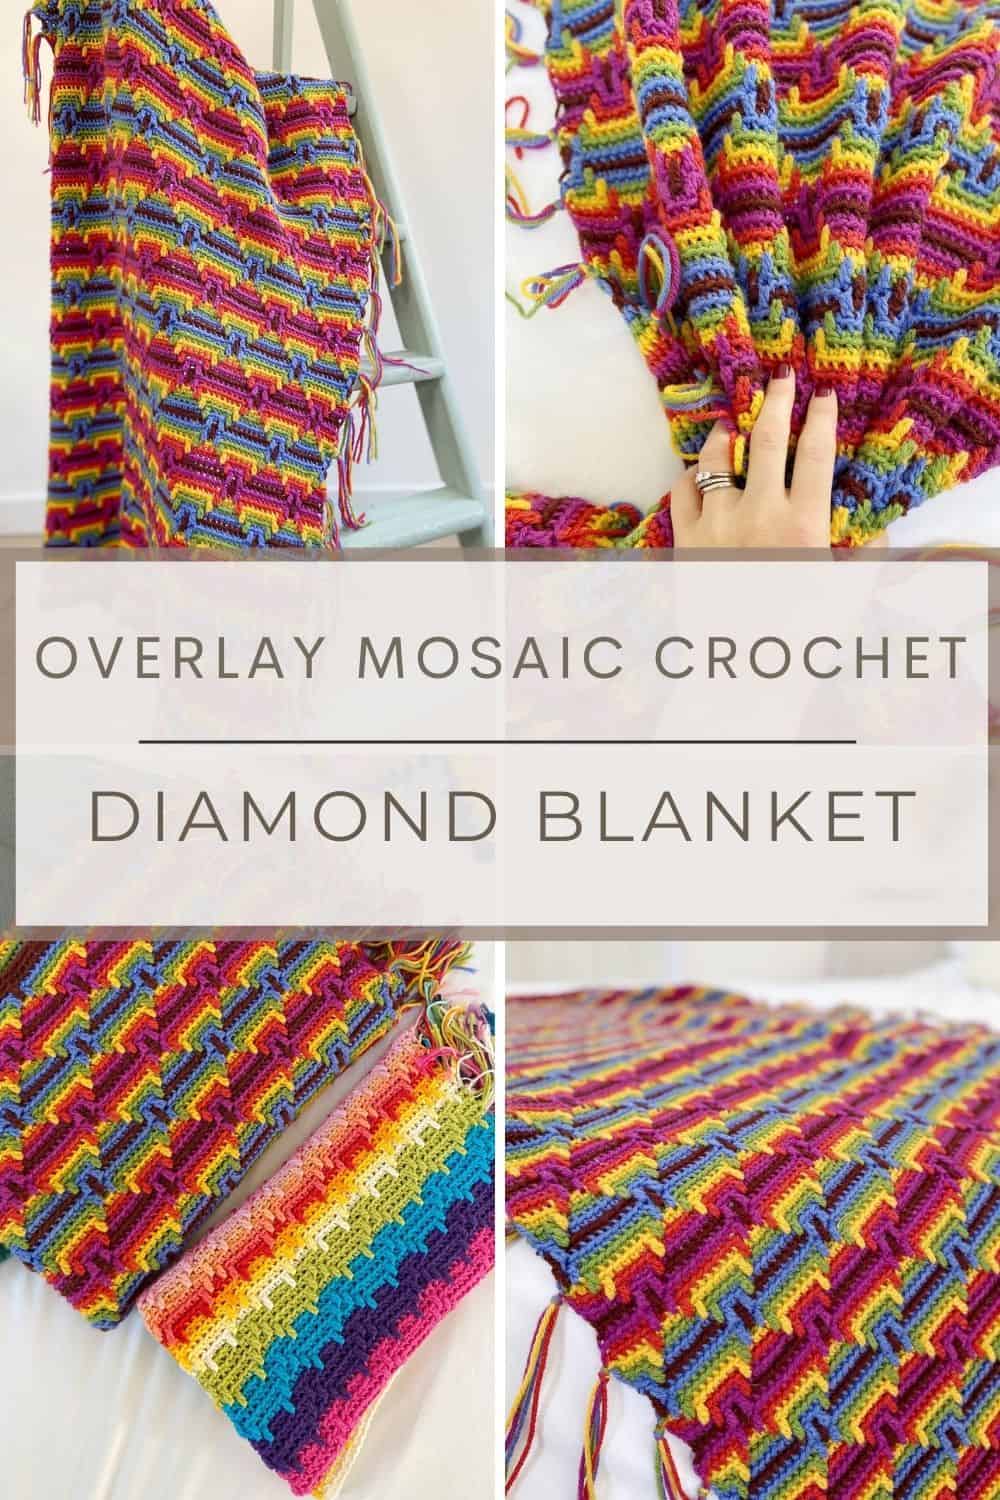 Mosaic Crochet - Modern Blankets in Overlay Mosaic 